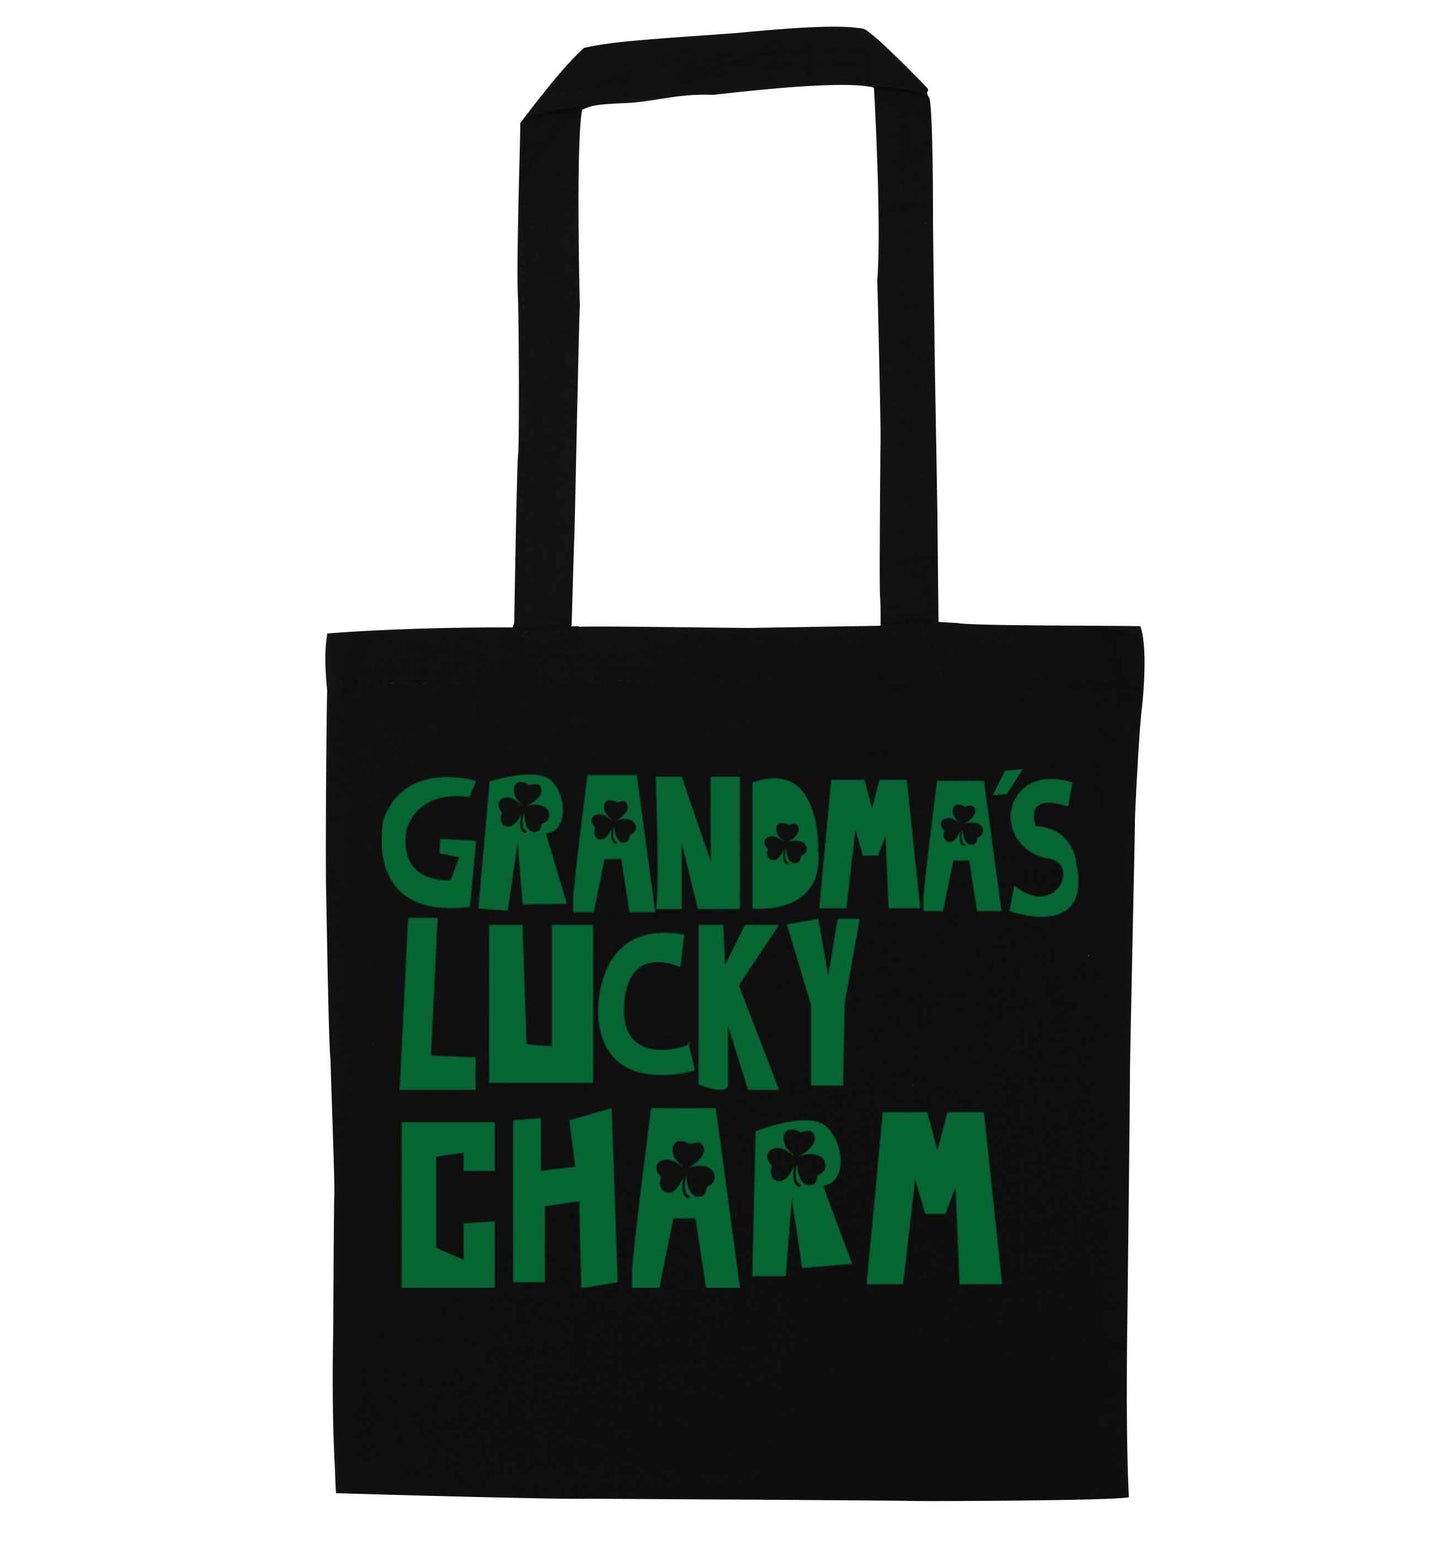 Grandma's lucky charm black tote bag